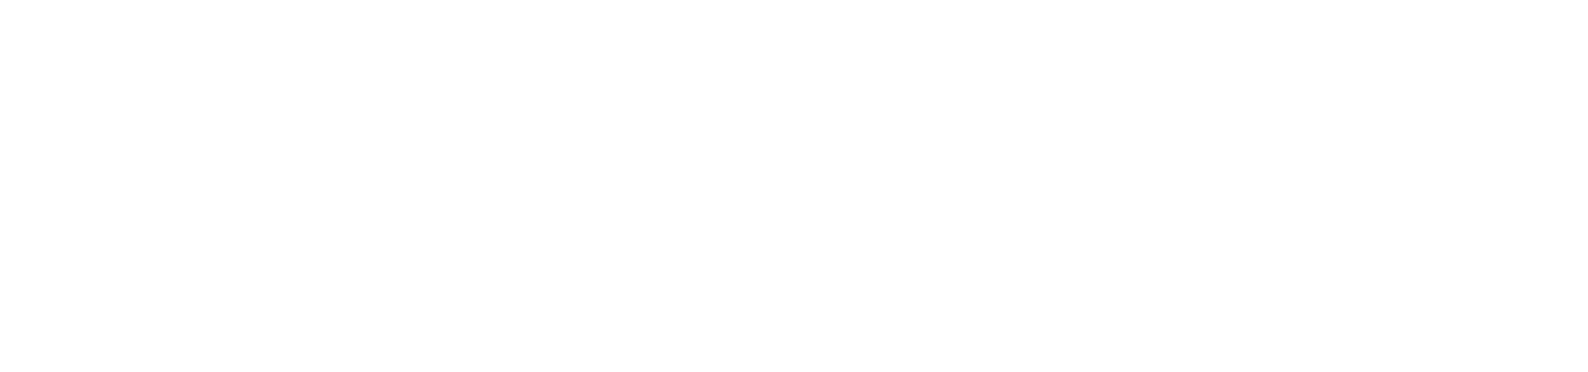 Alumina Limited Logo groß für dunkle Hintergründe (transparentes PNG)